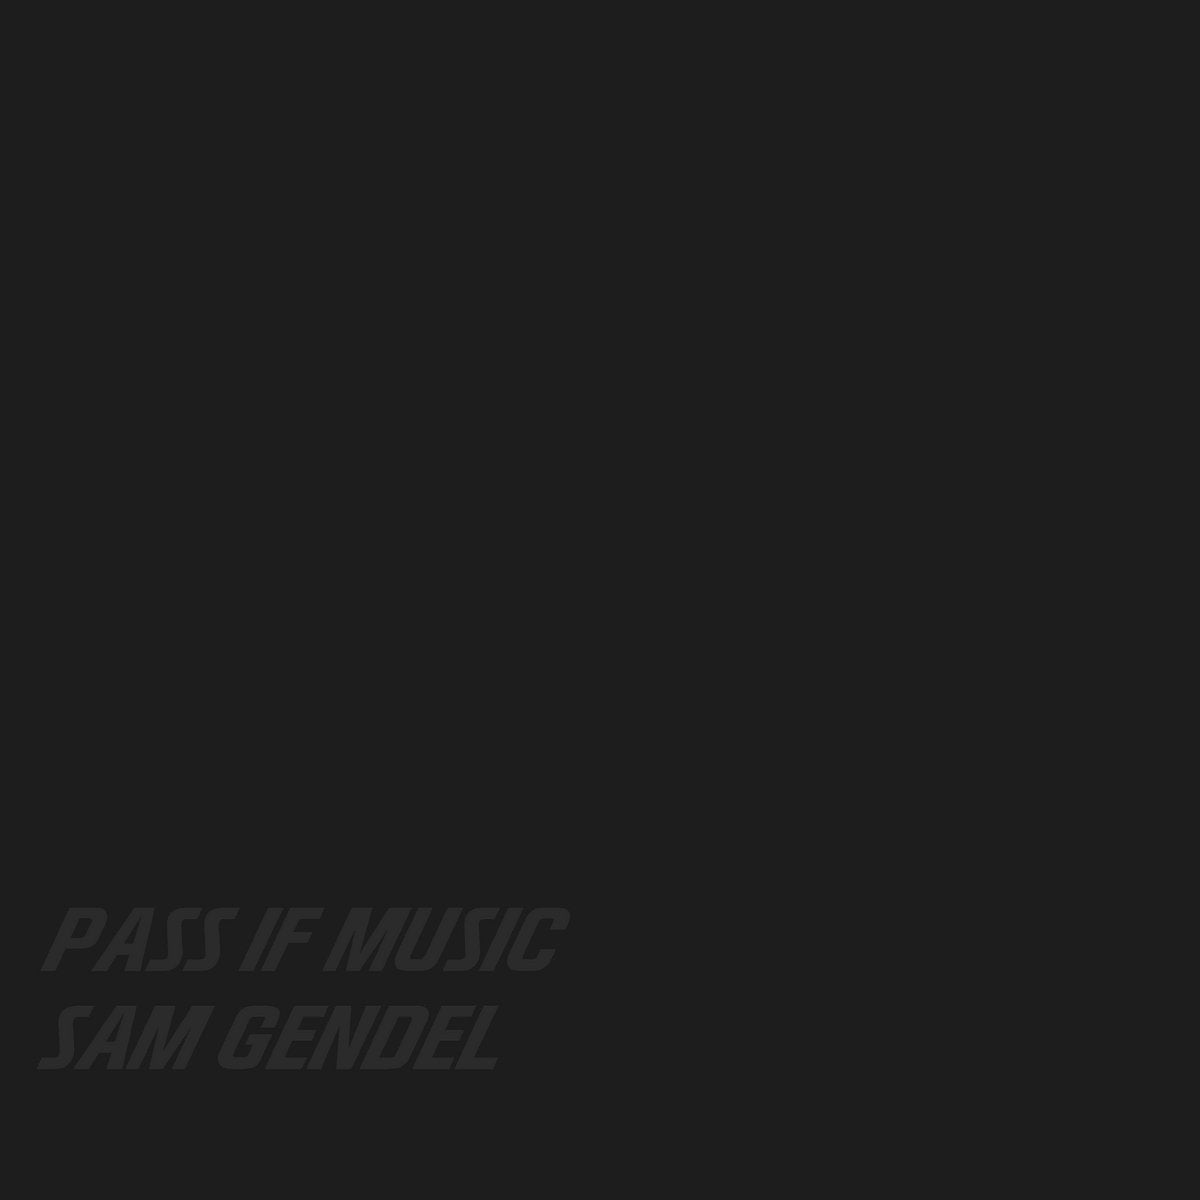 Sam Gendel - Pass If Music [LP]